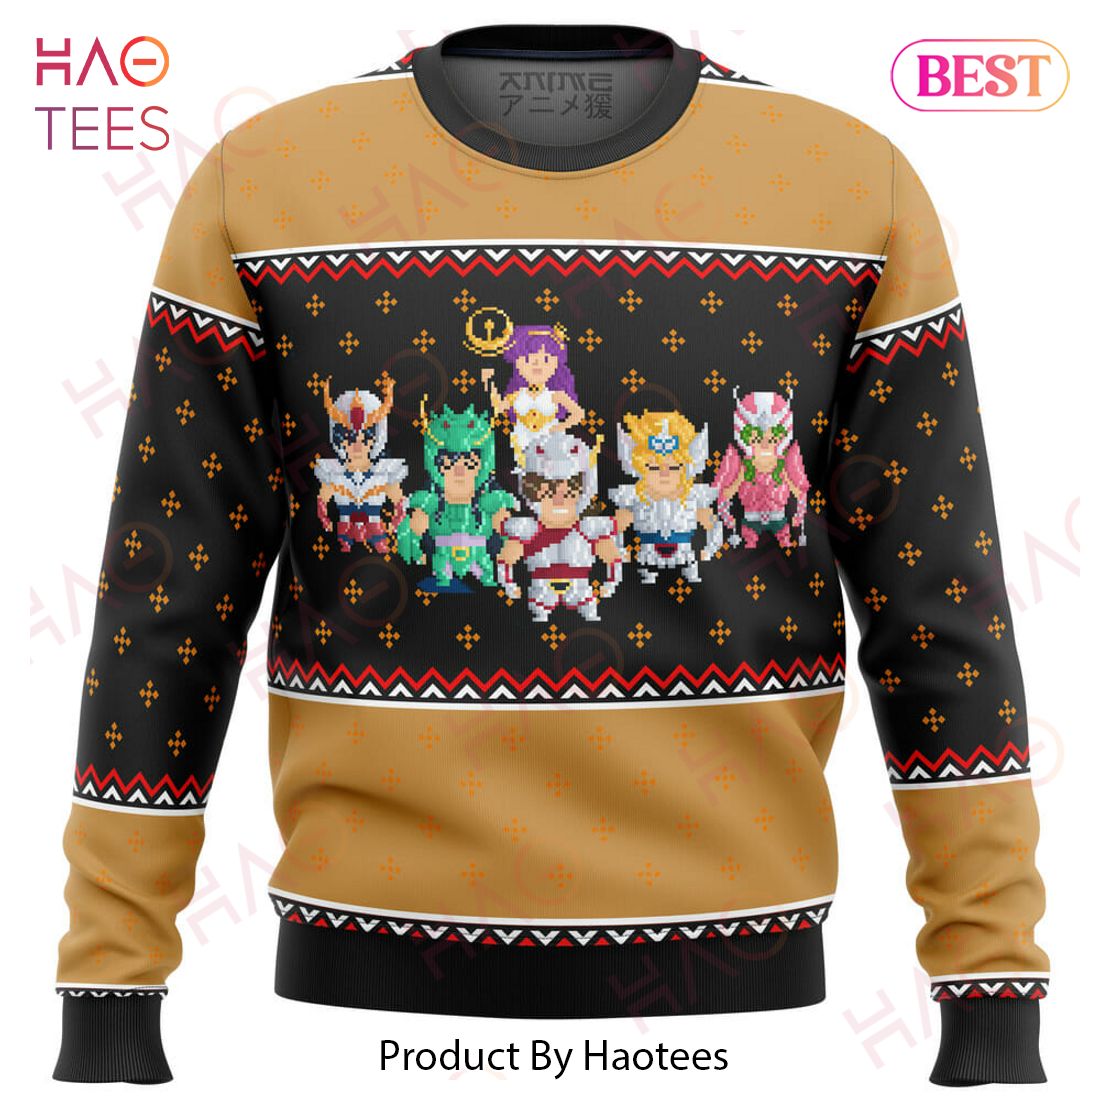 Knights of the Zodiac St Seiya Ugly Christmas Sweater